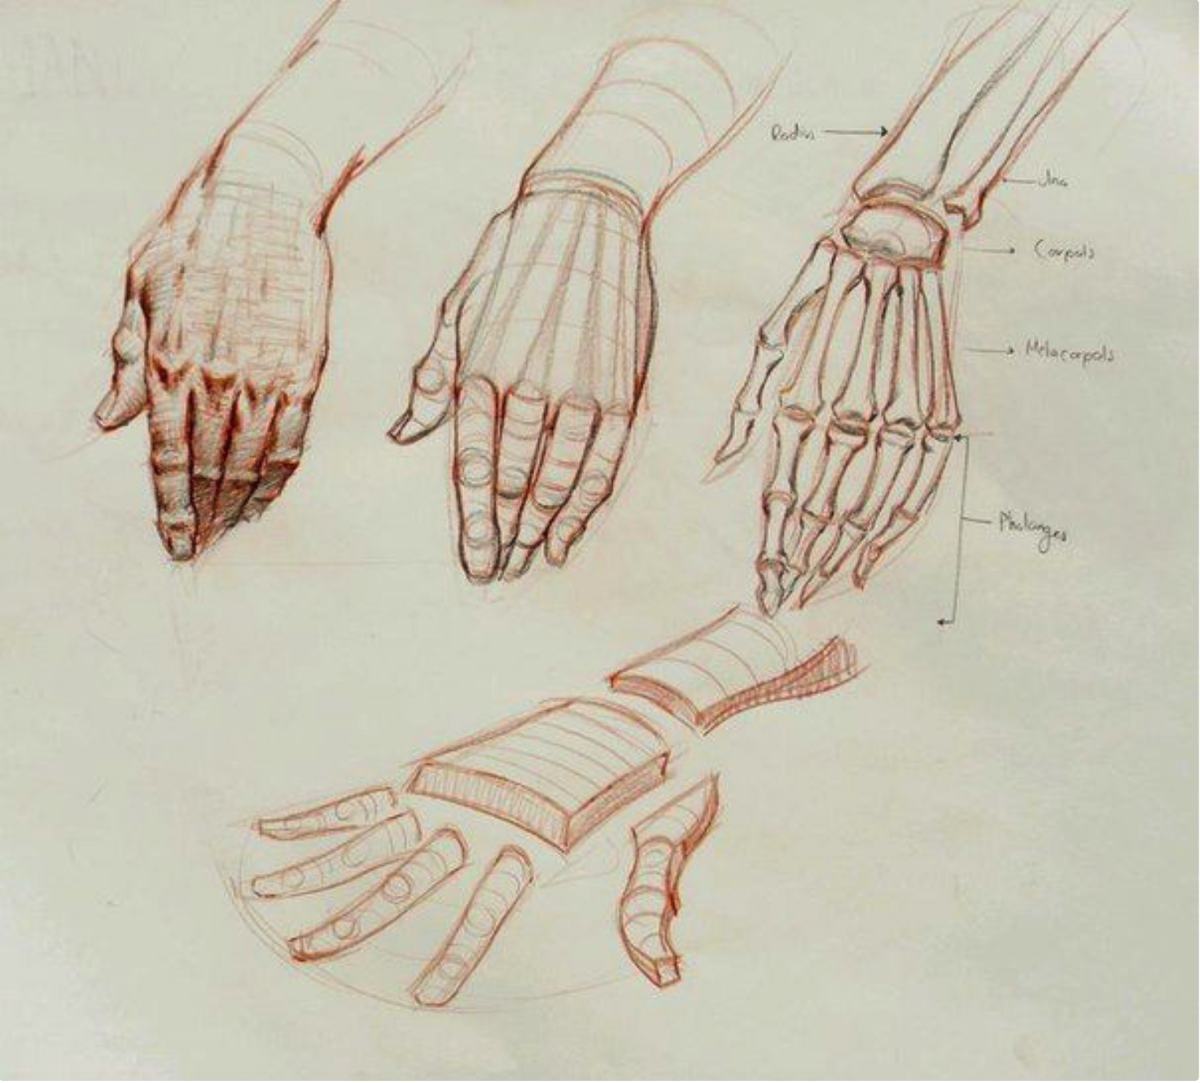 Руки человека рассказ. Анатомия Баммес кисти рук. Анатомия кисти референс. Руки референс анатомия кисти. Скелет кисти руки человека референс.